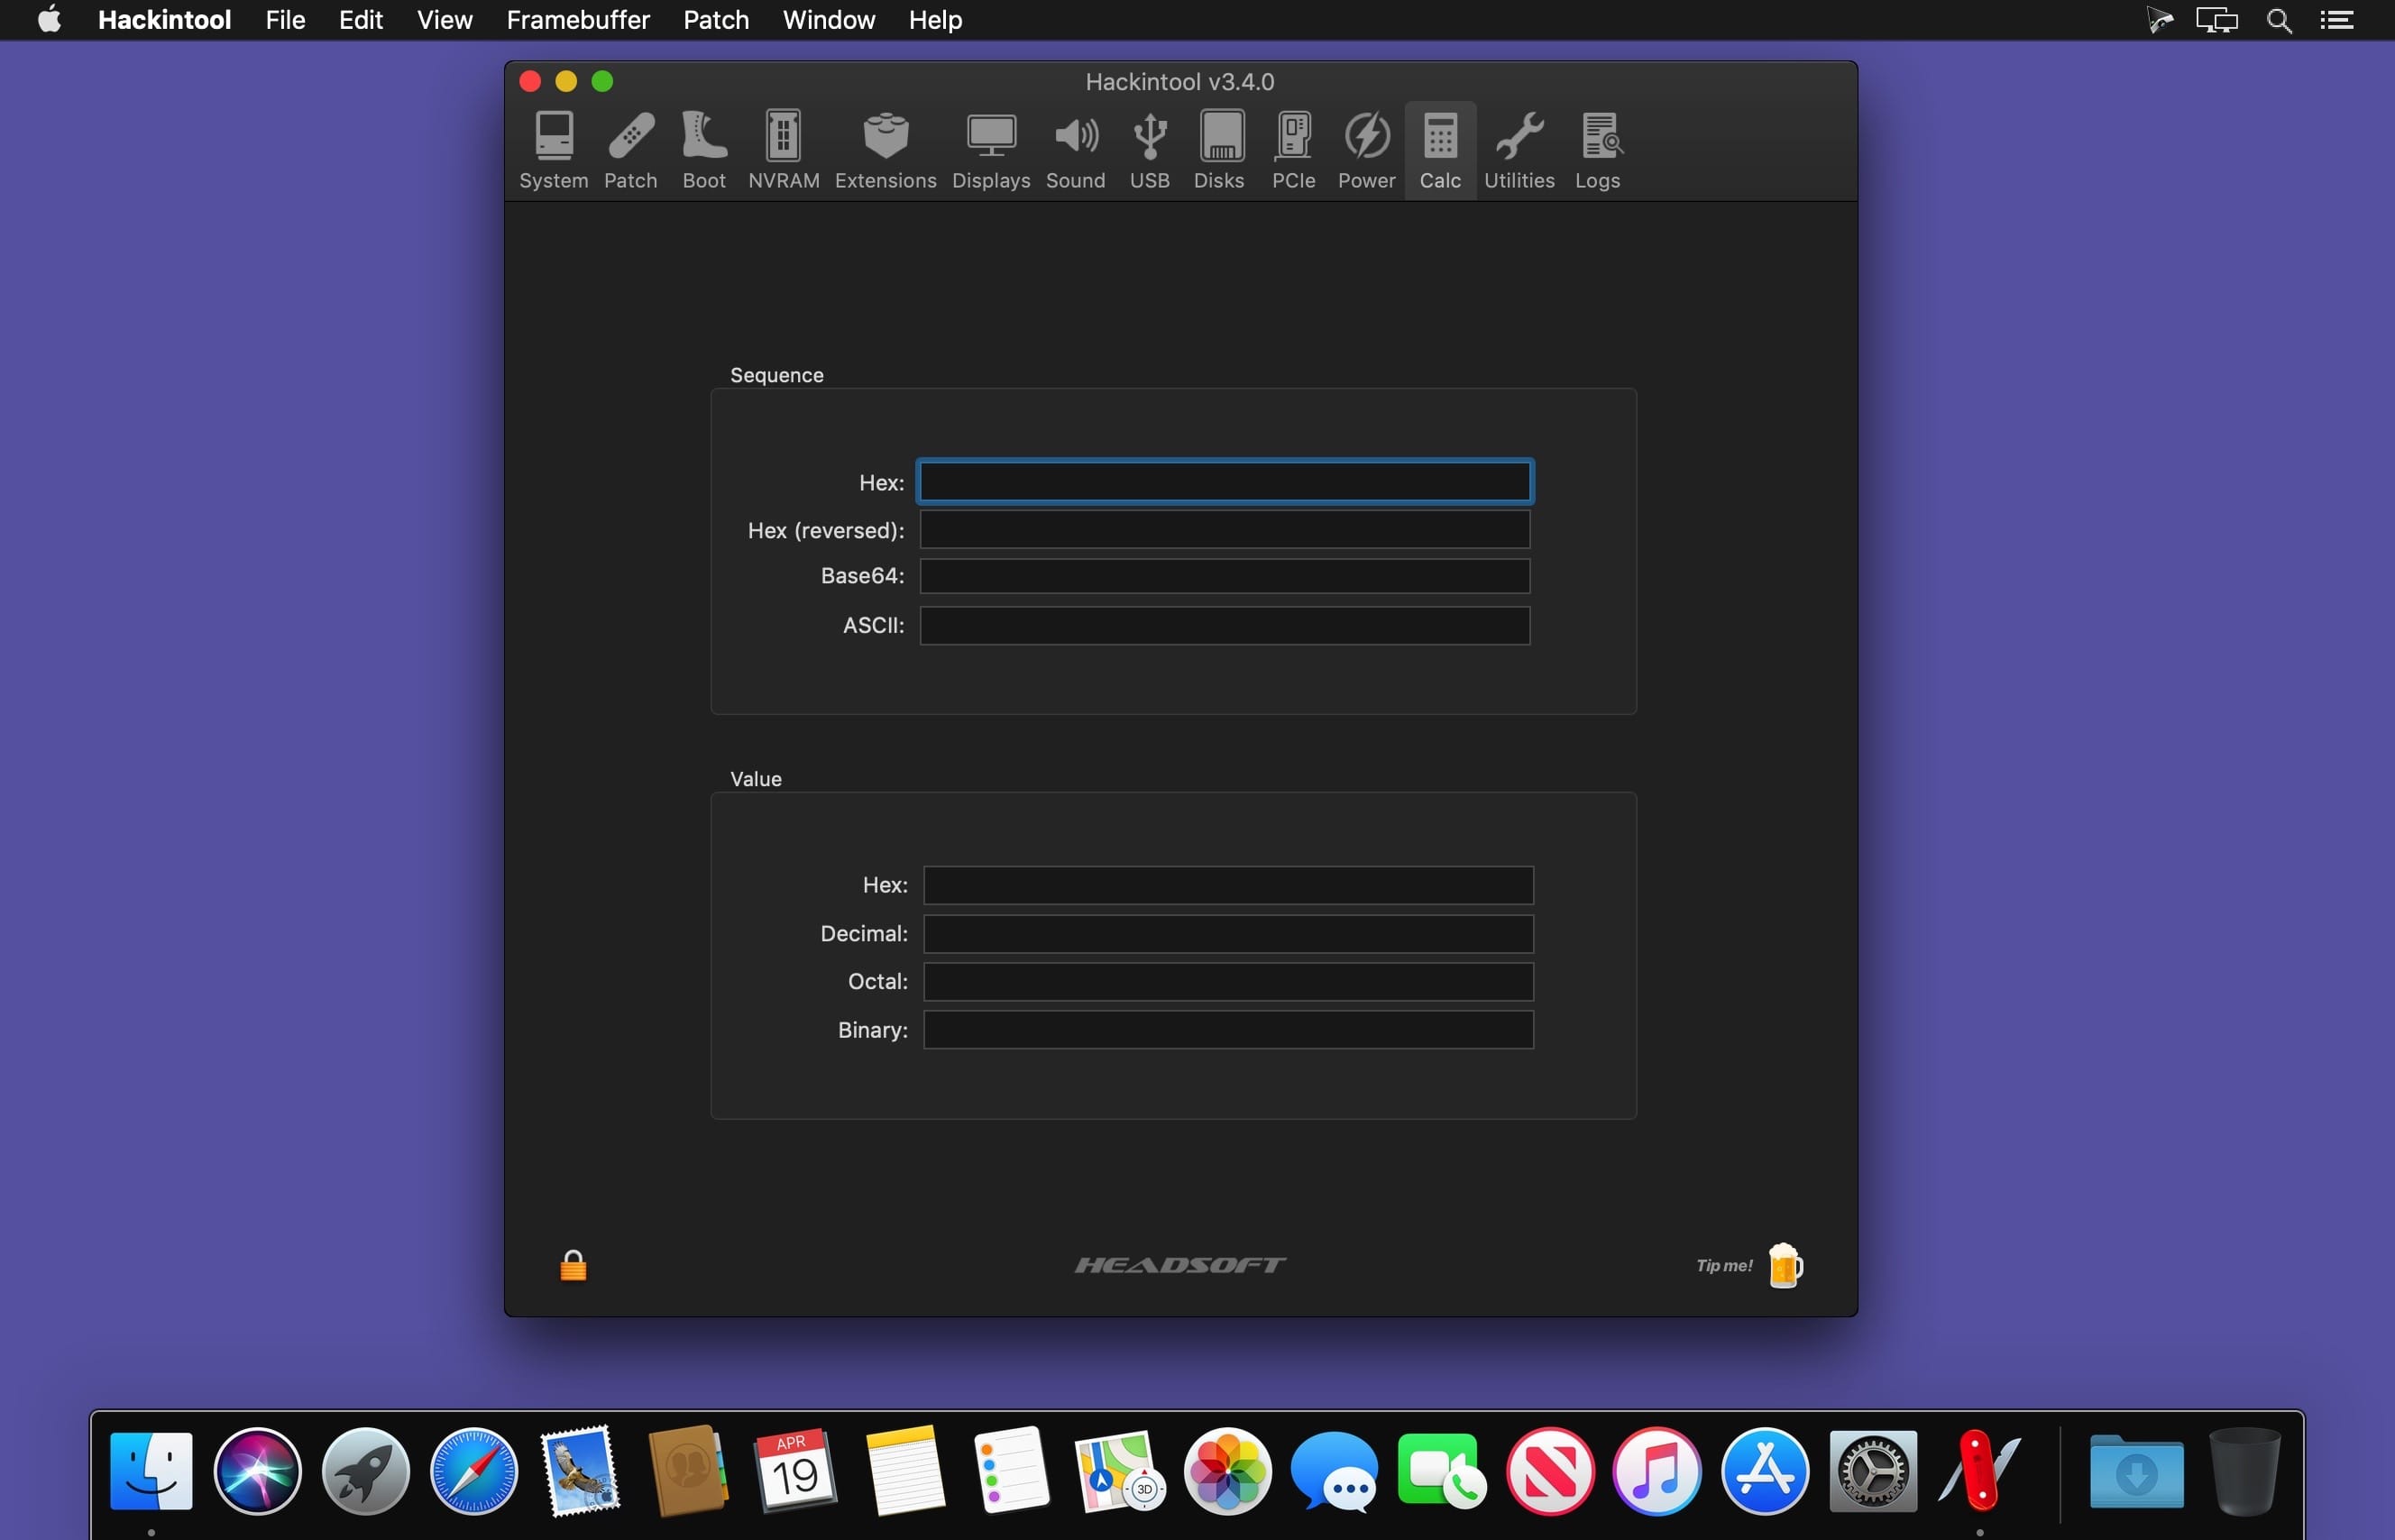 download onyx for mac os sierra version 10.12.6